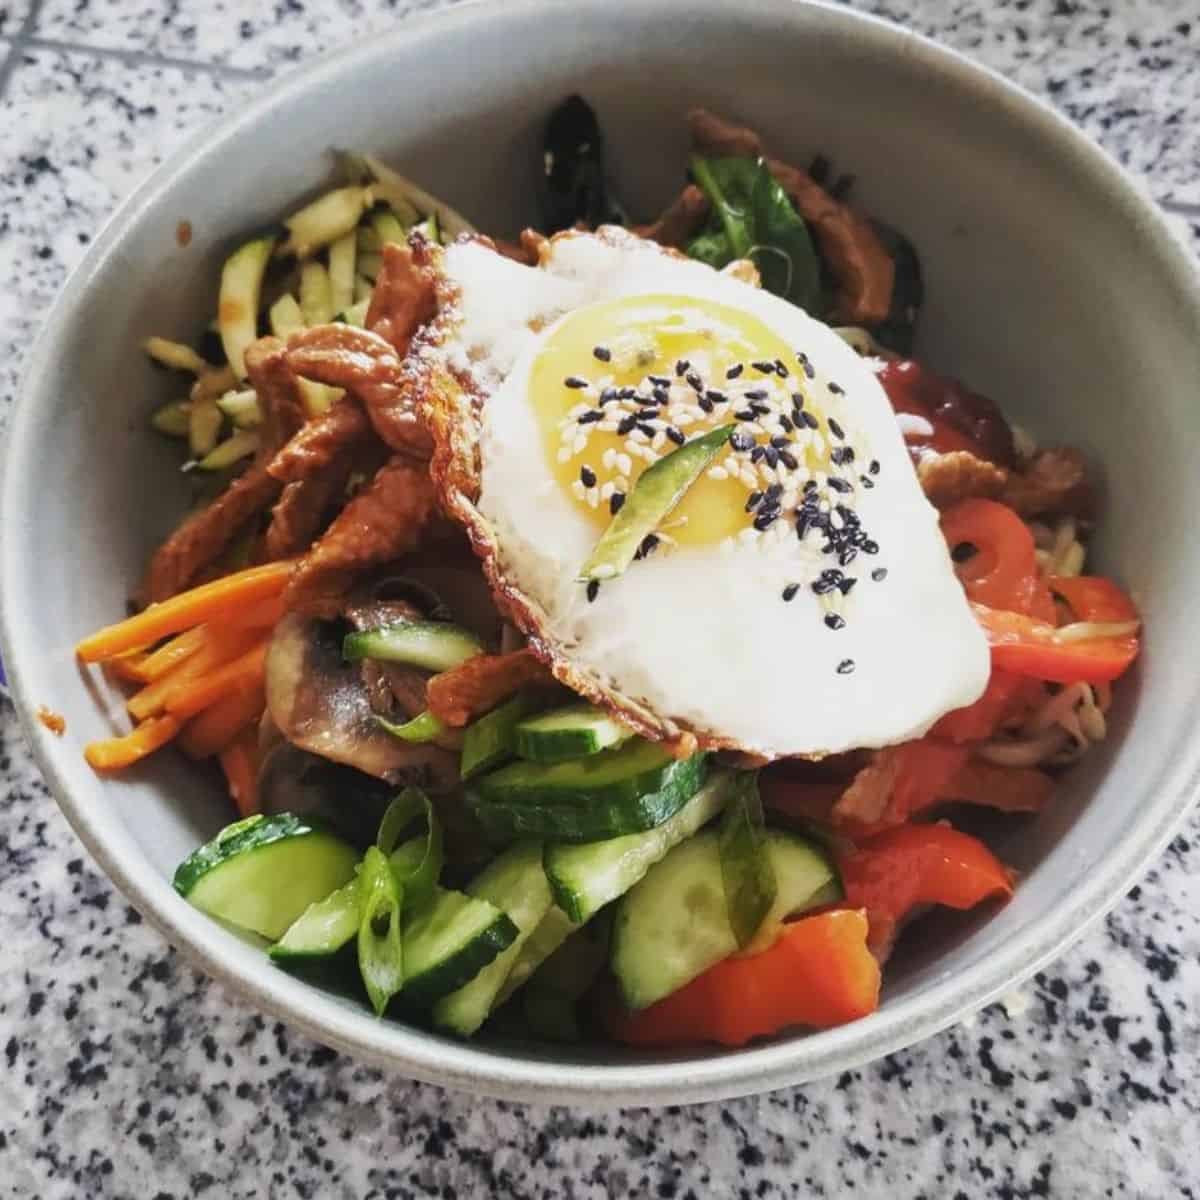 Quick & Easy Dosirak Korean Lunch Box - Christie at Home